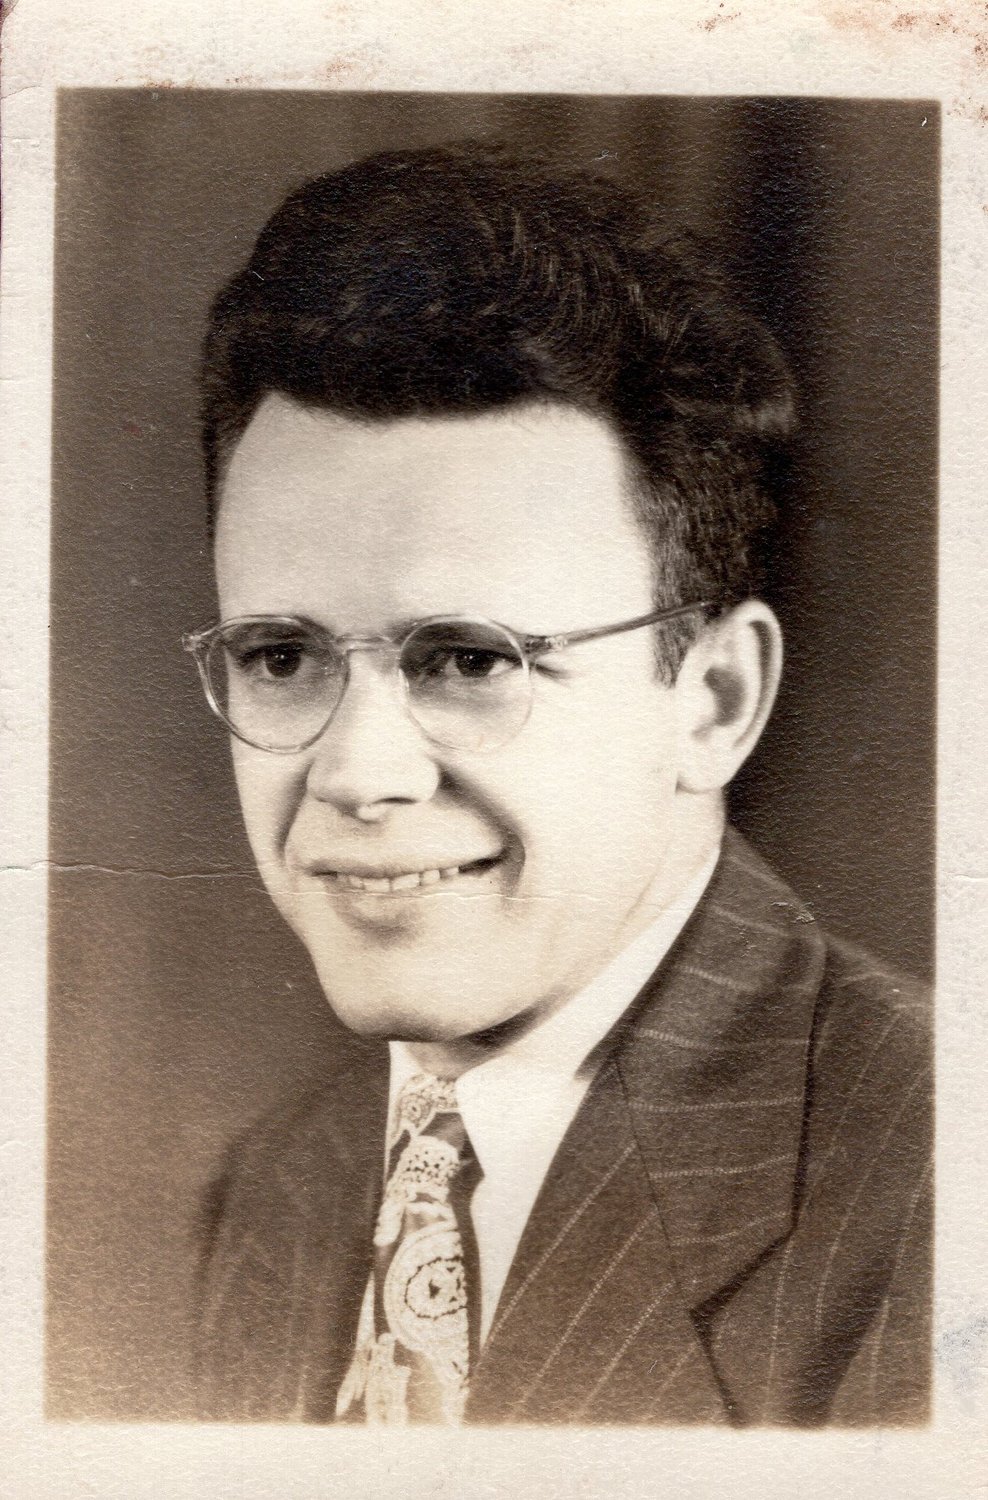 Walker circa 1950.